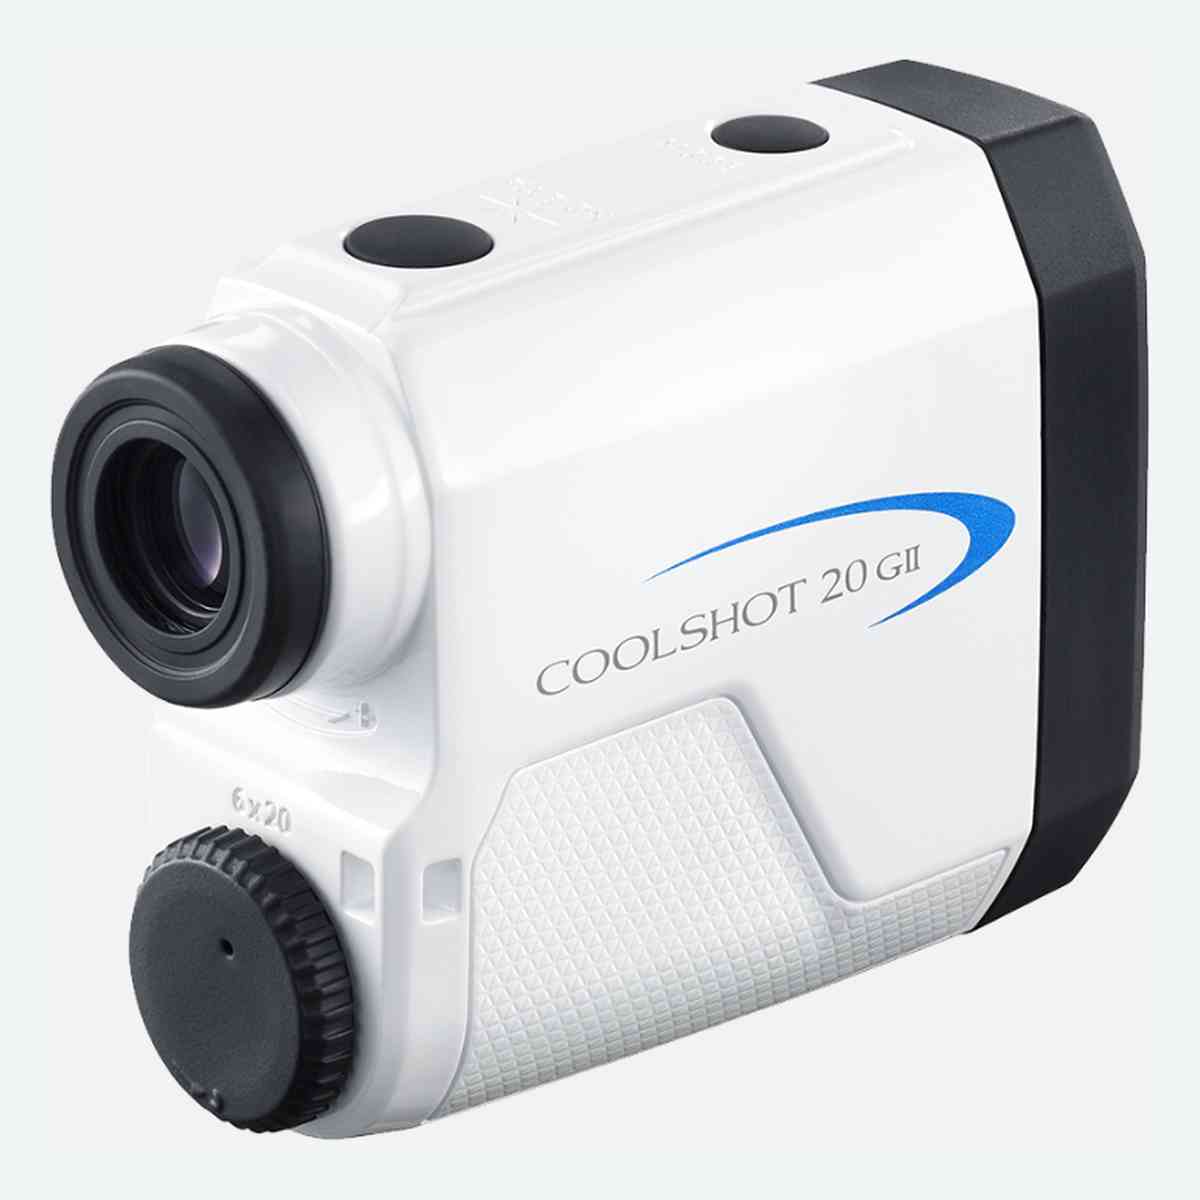 Nikon Coolshot 20 GII Golf Laser Rangefinder - Standard Version